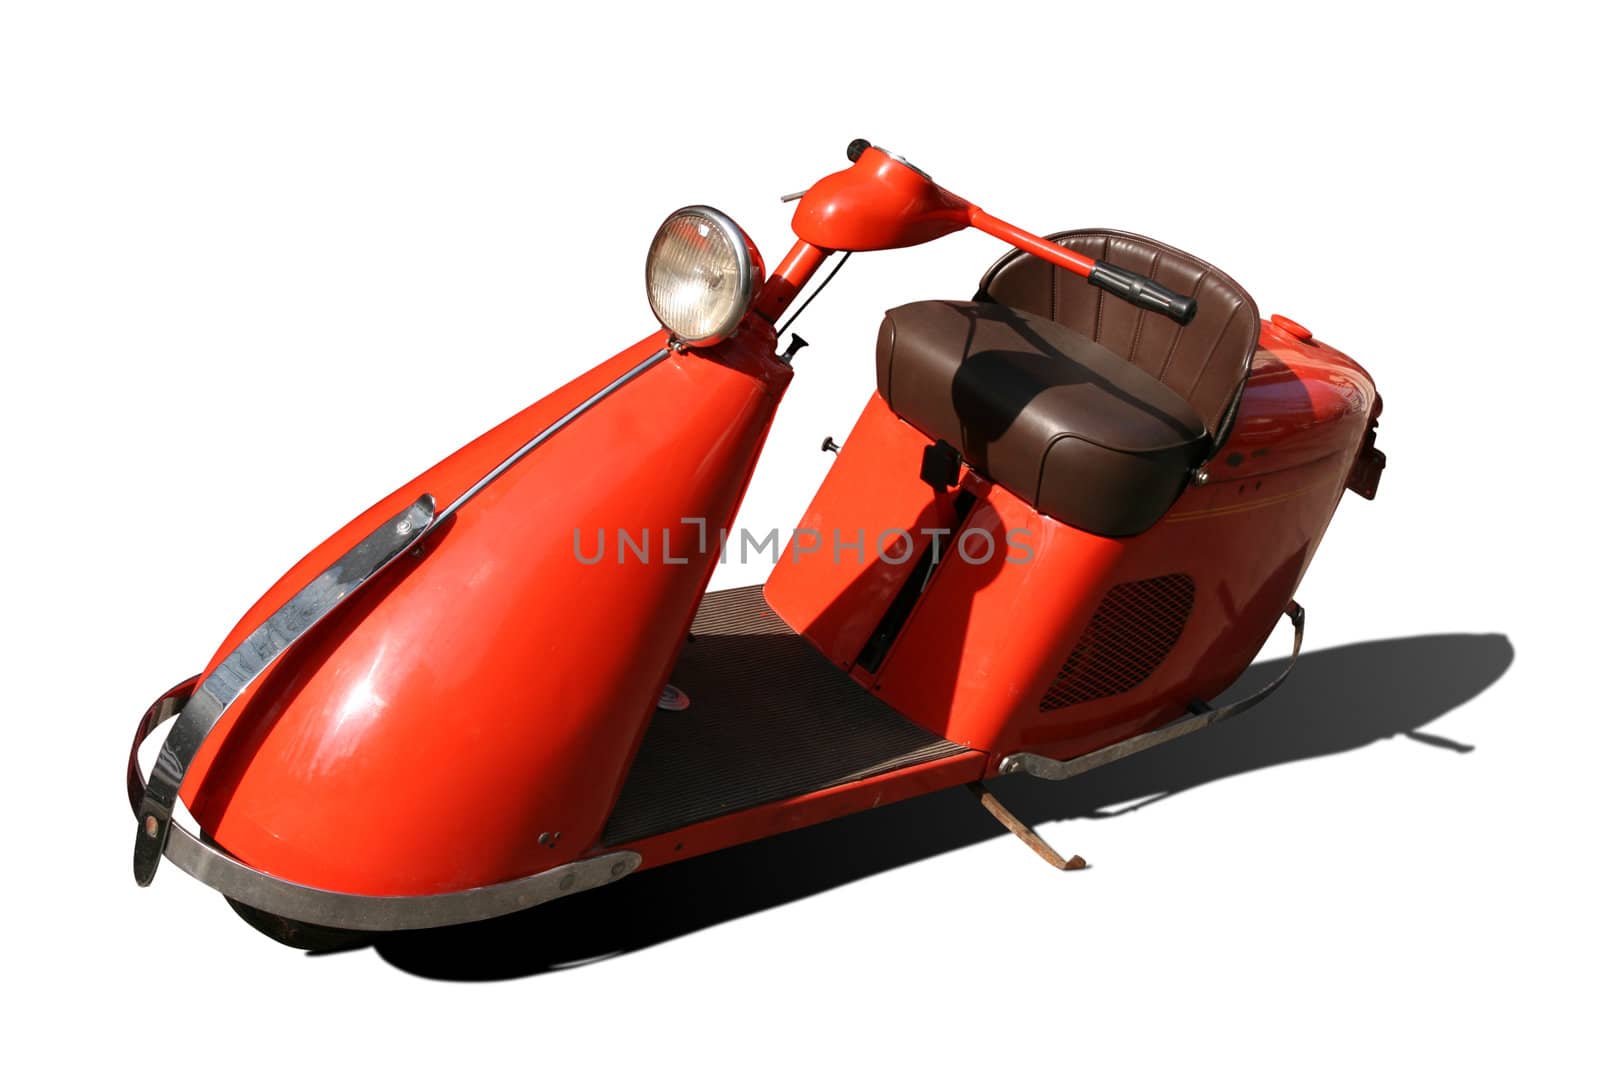 Vintage orange scooter isolated on white background